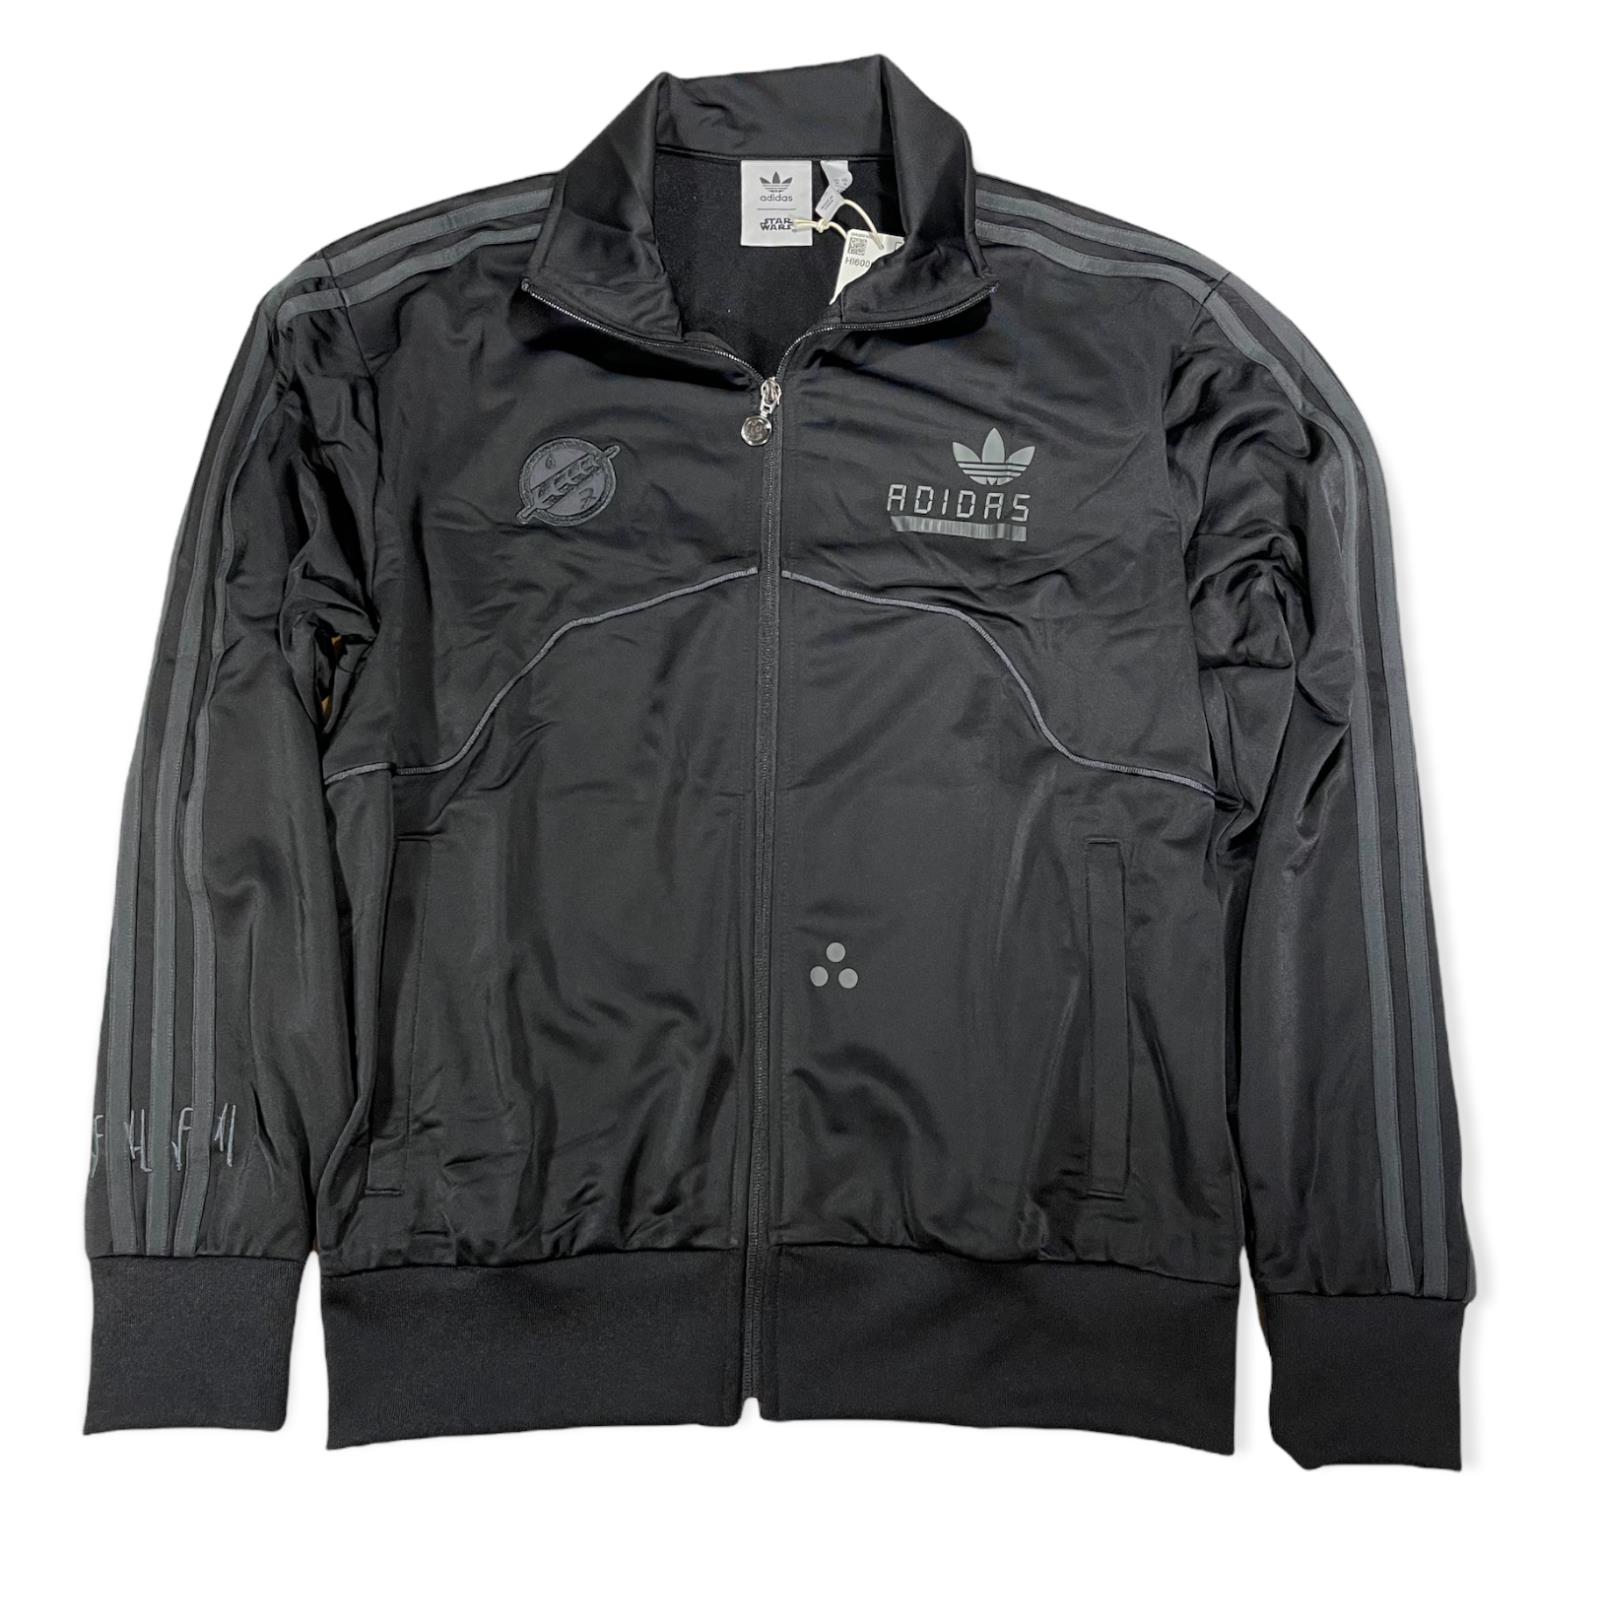 Adidas Star Wars Boba Fett Firebird Track Top Jacket Black HI6000 XL X-large